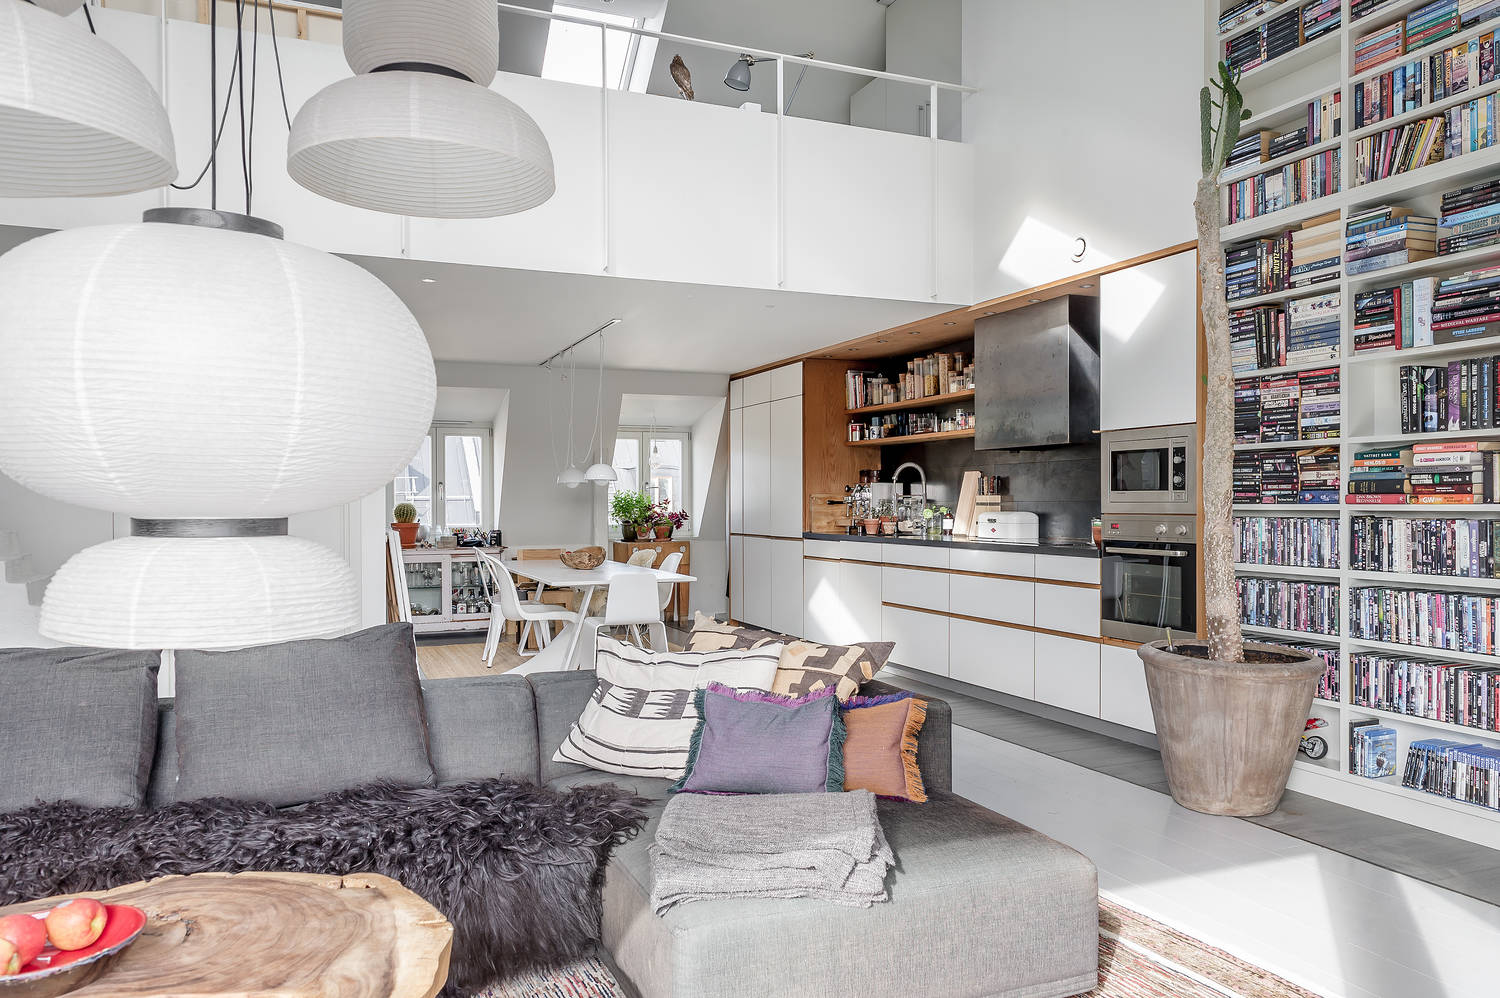 A super dreamy & cozy Scandinavian apartment